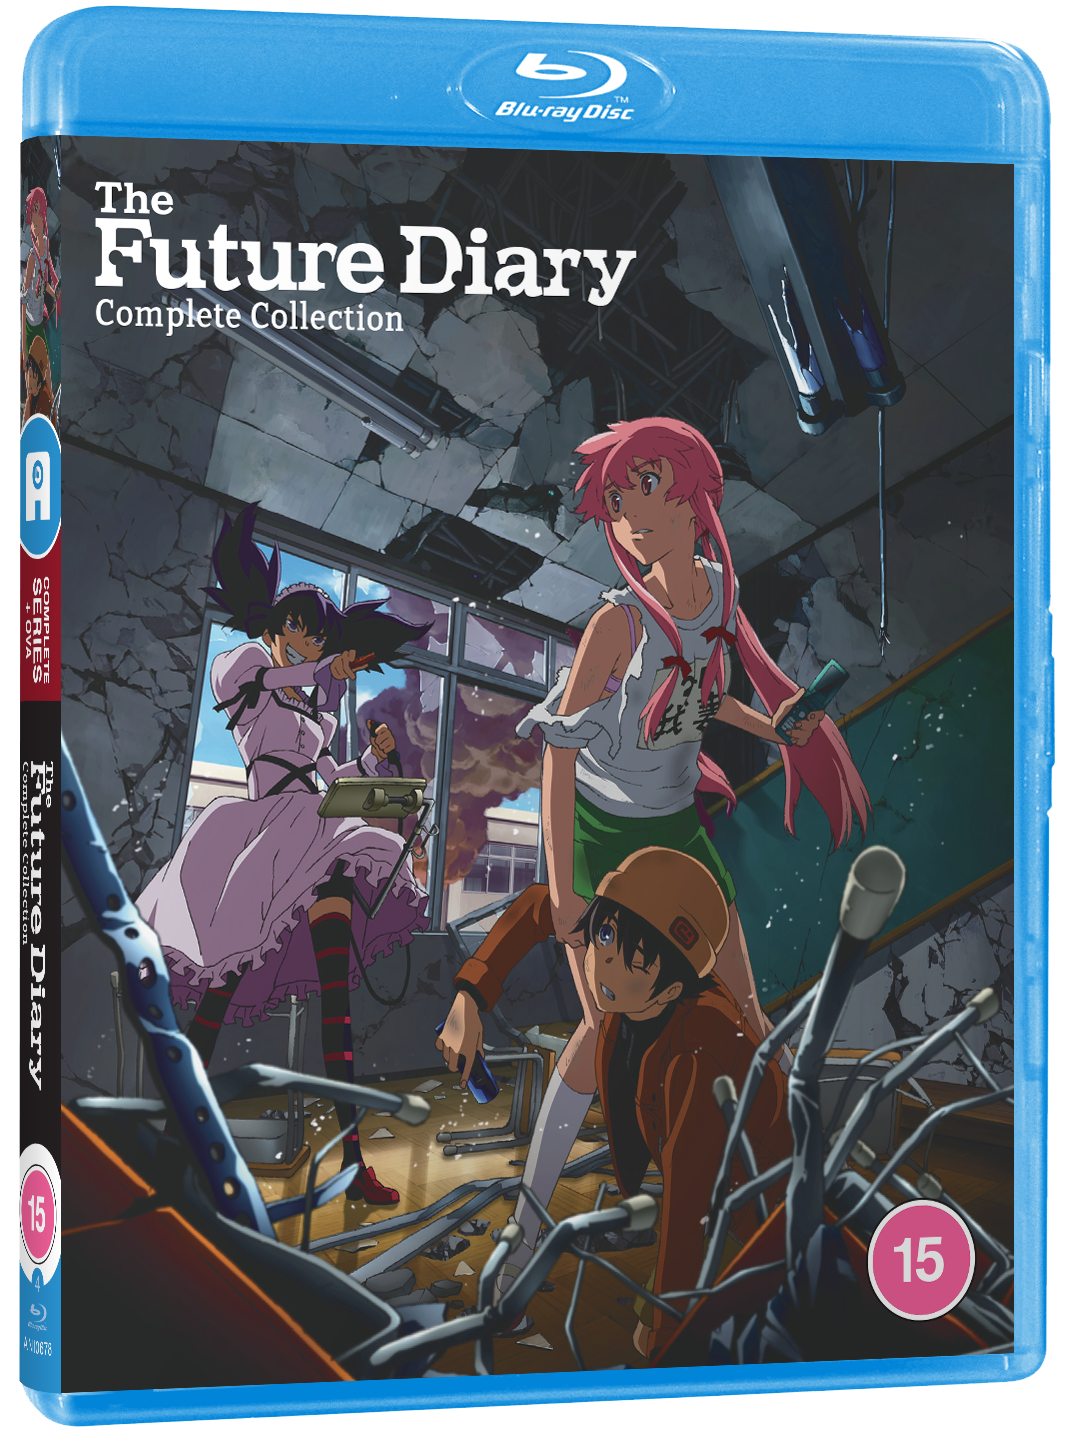 Mirai Nikki The Future Diary TV + OVA Japanese Anime DVD English